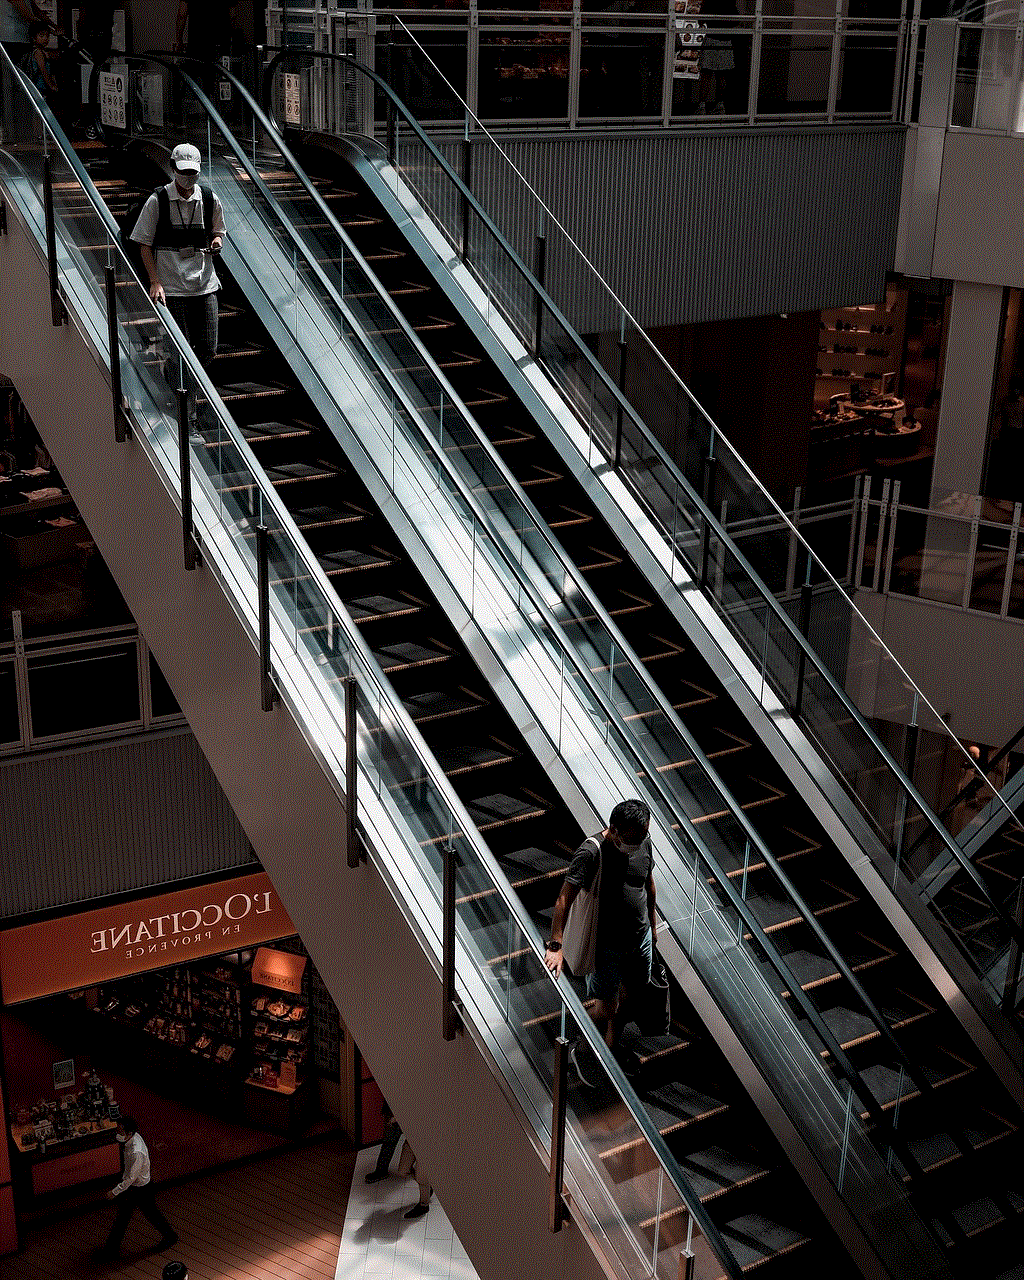 Escalator Stairs